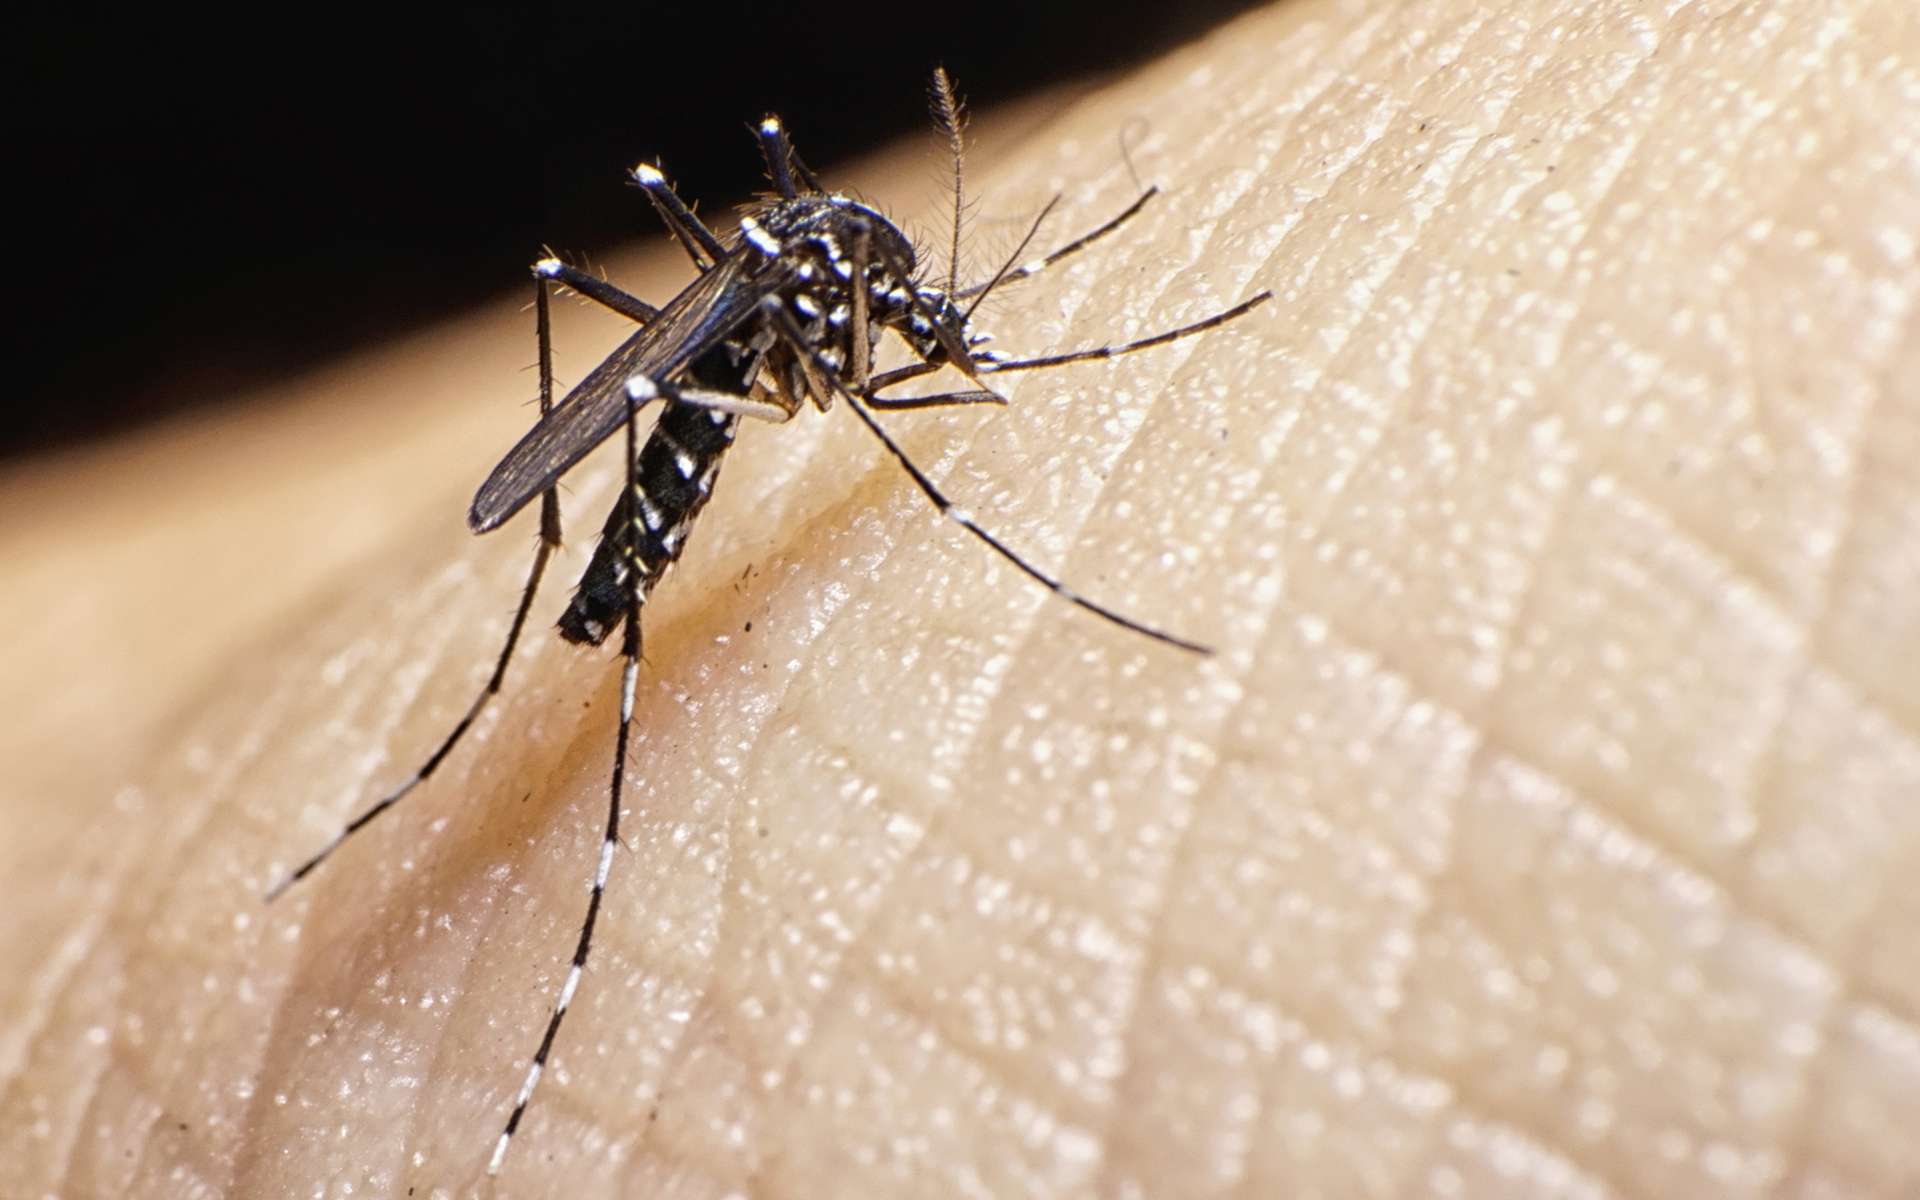 Le moustique tigre transmet plusieurs maladies virales. © AbelBrata, IStock.com